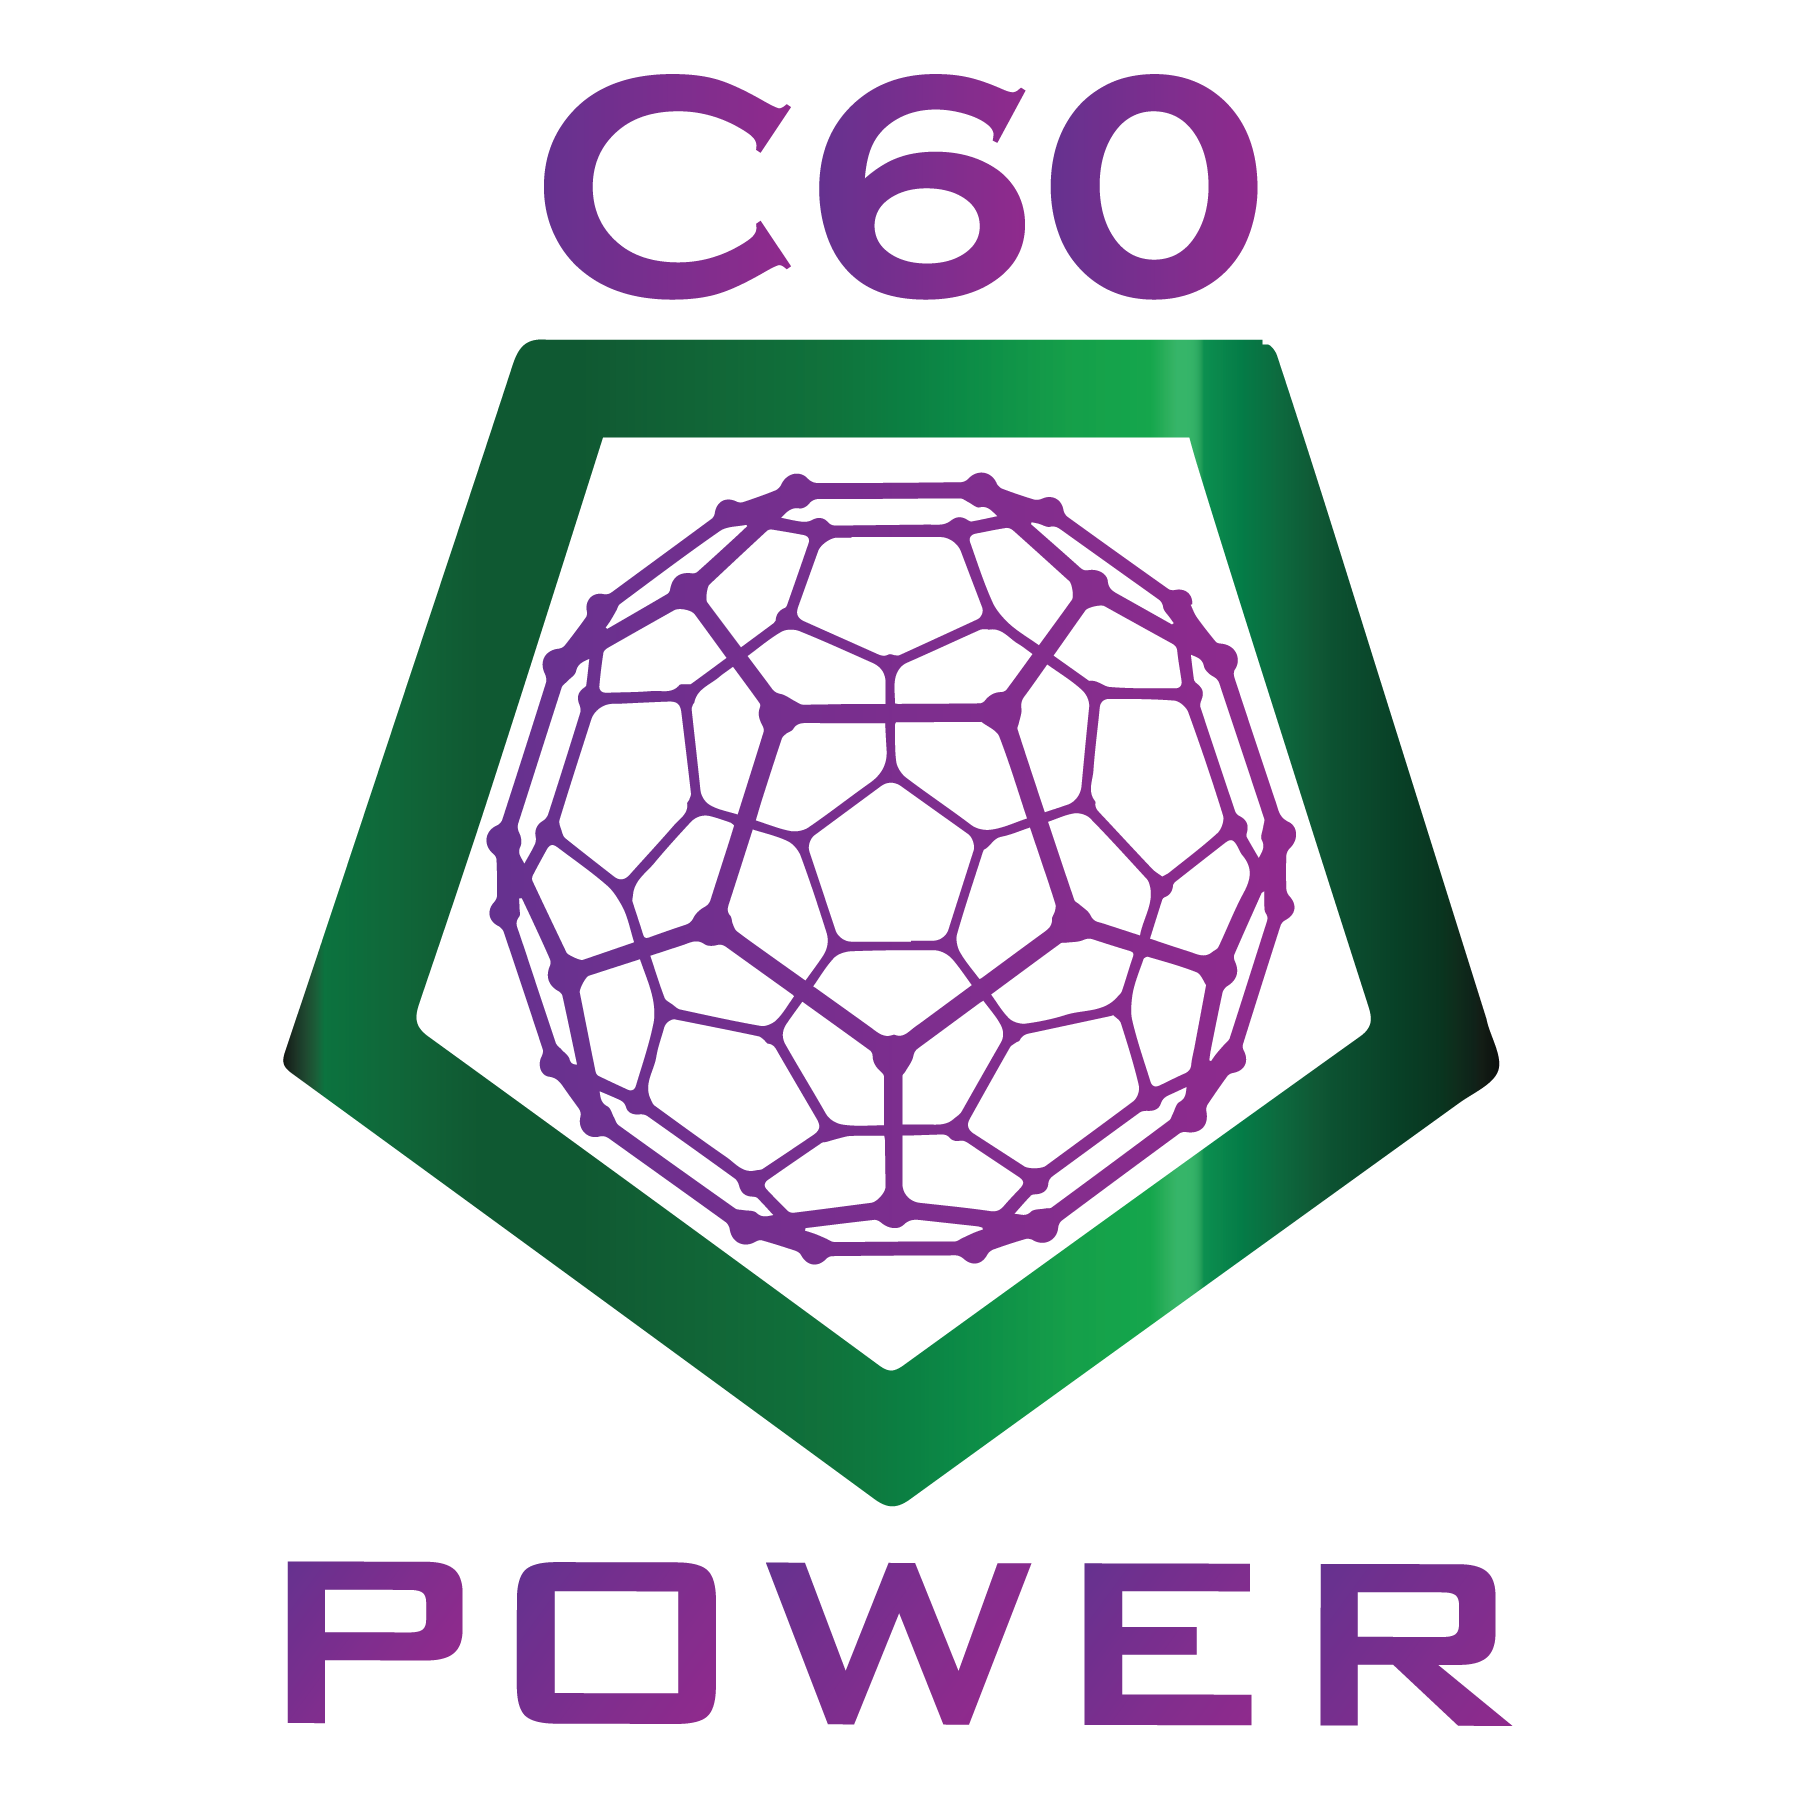 c60 Supplement